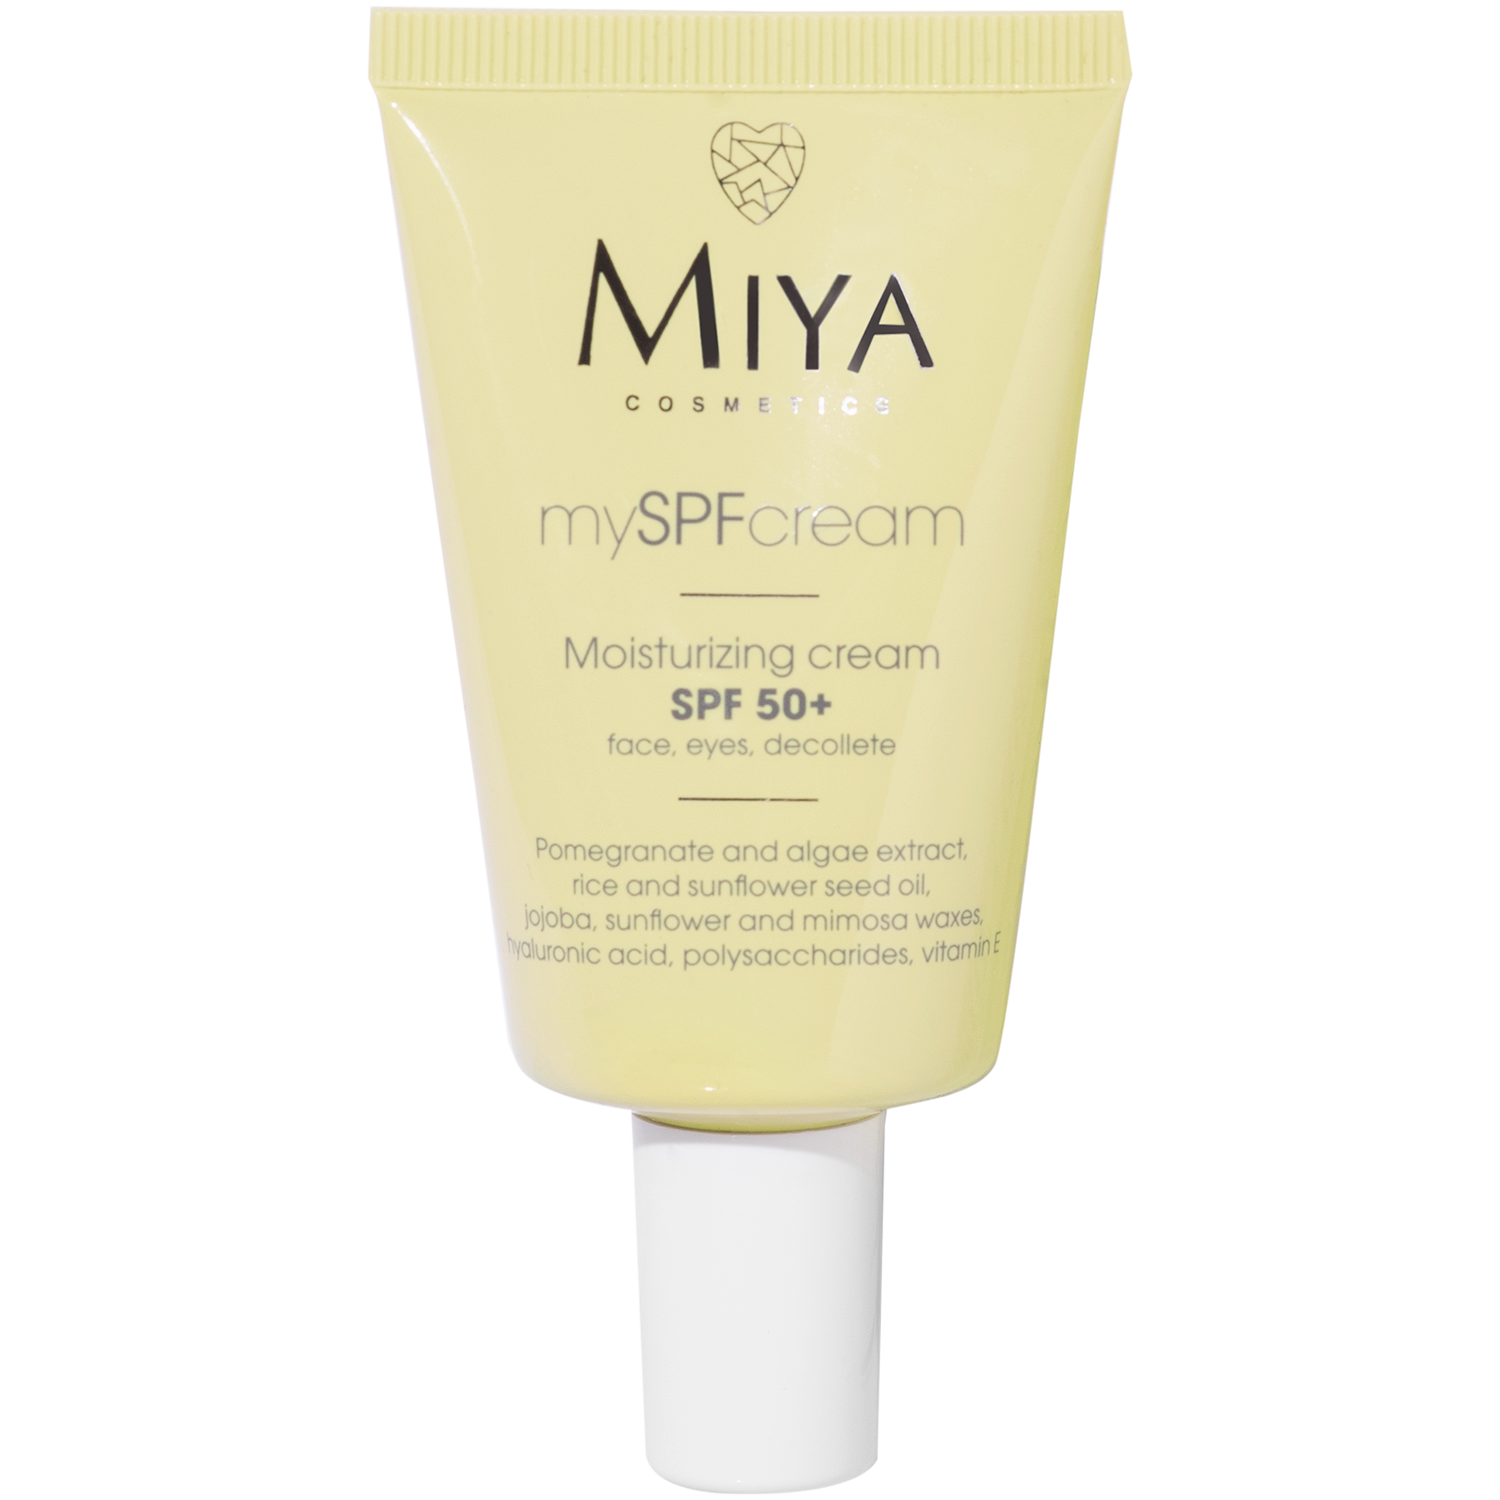 Miya Cosmetics mySPFcream